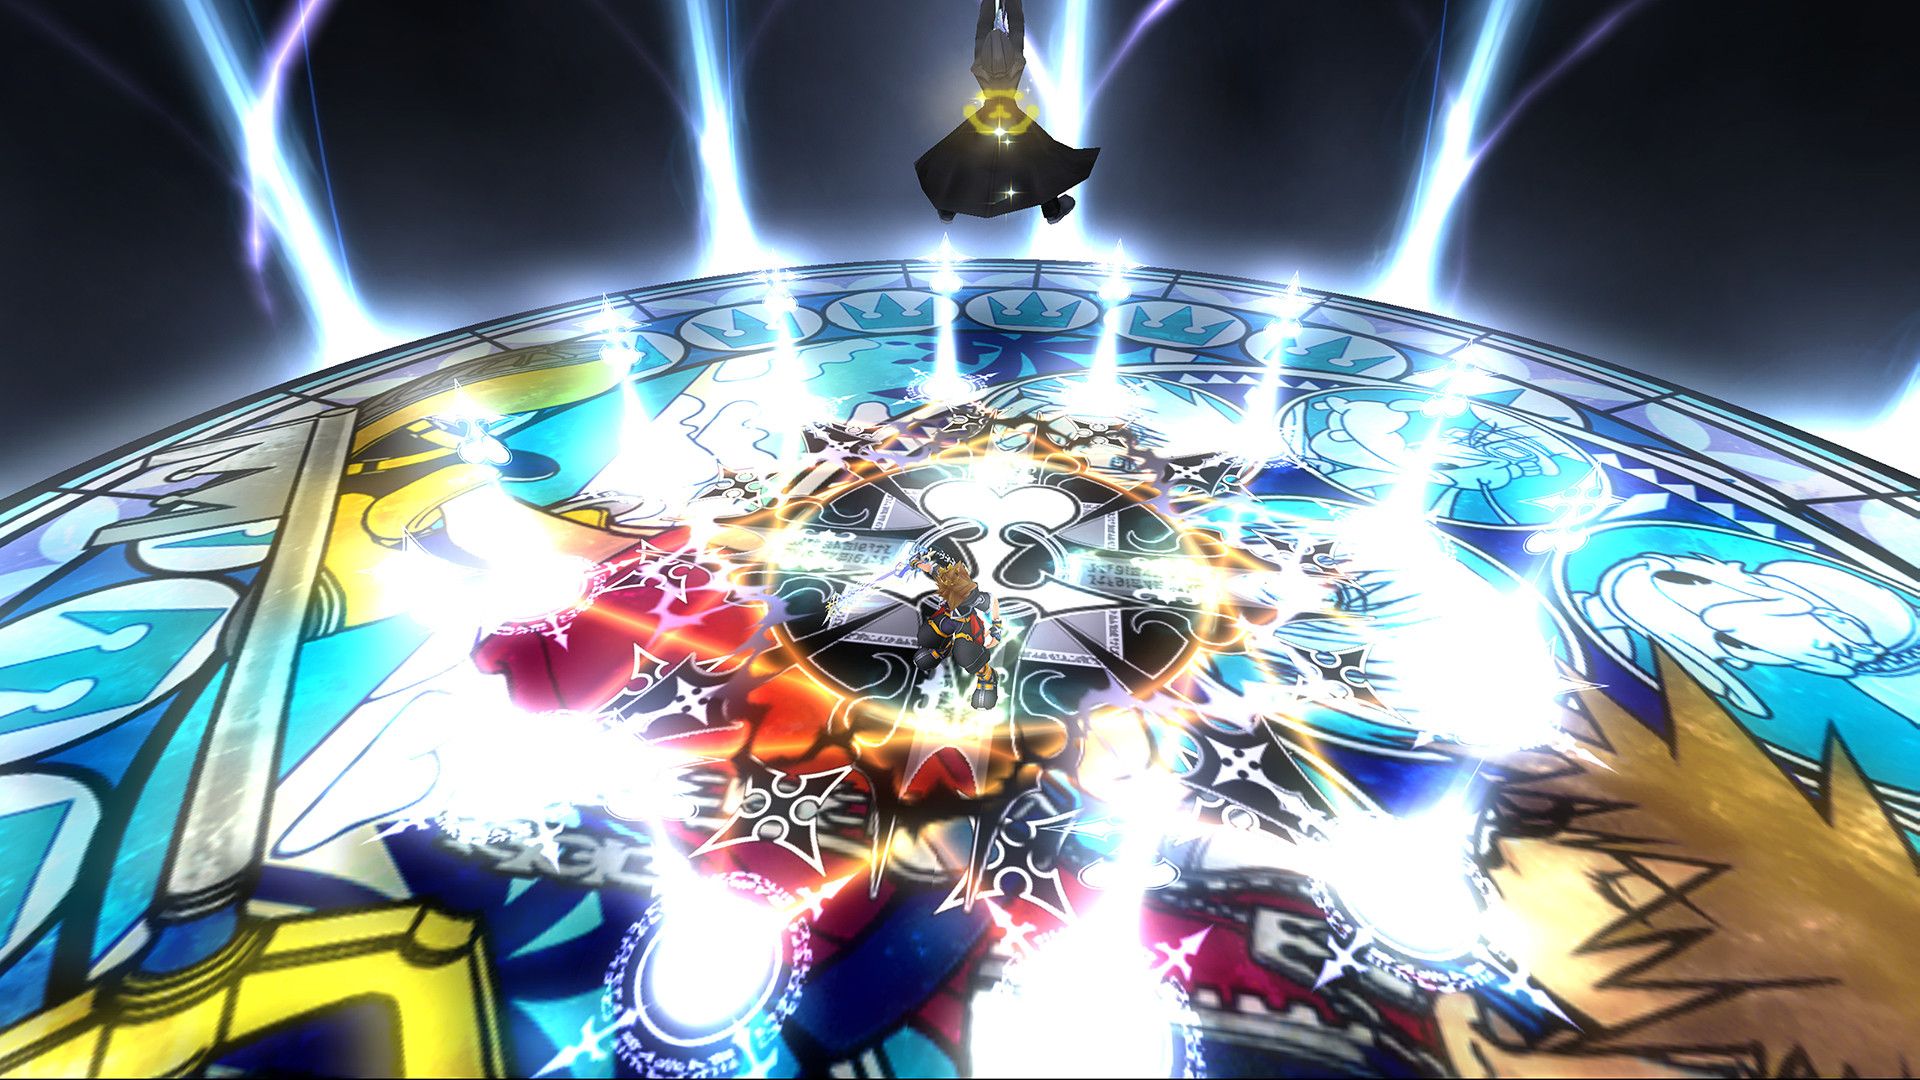 Kingdom Hearts 2 Final Mix Wallpapers